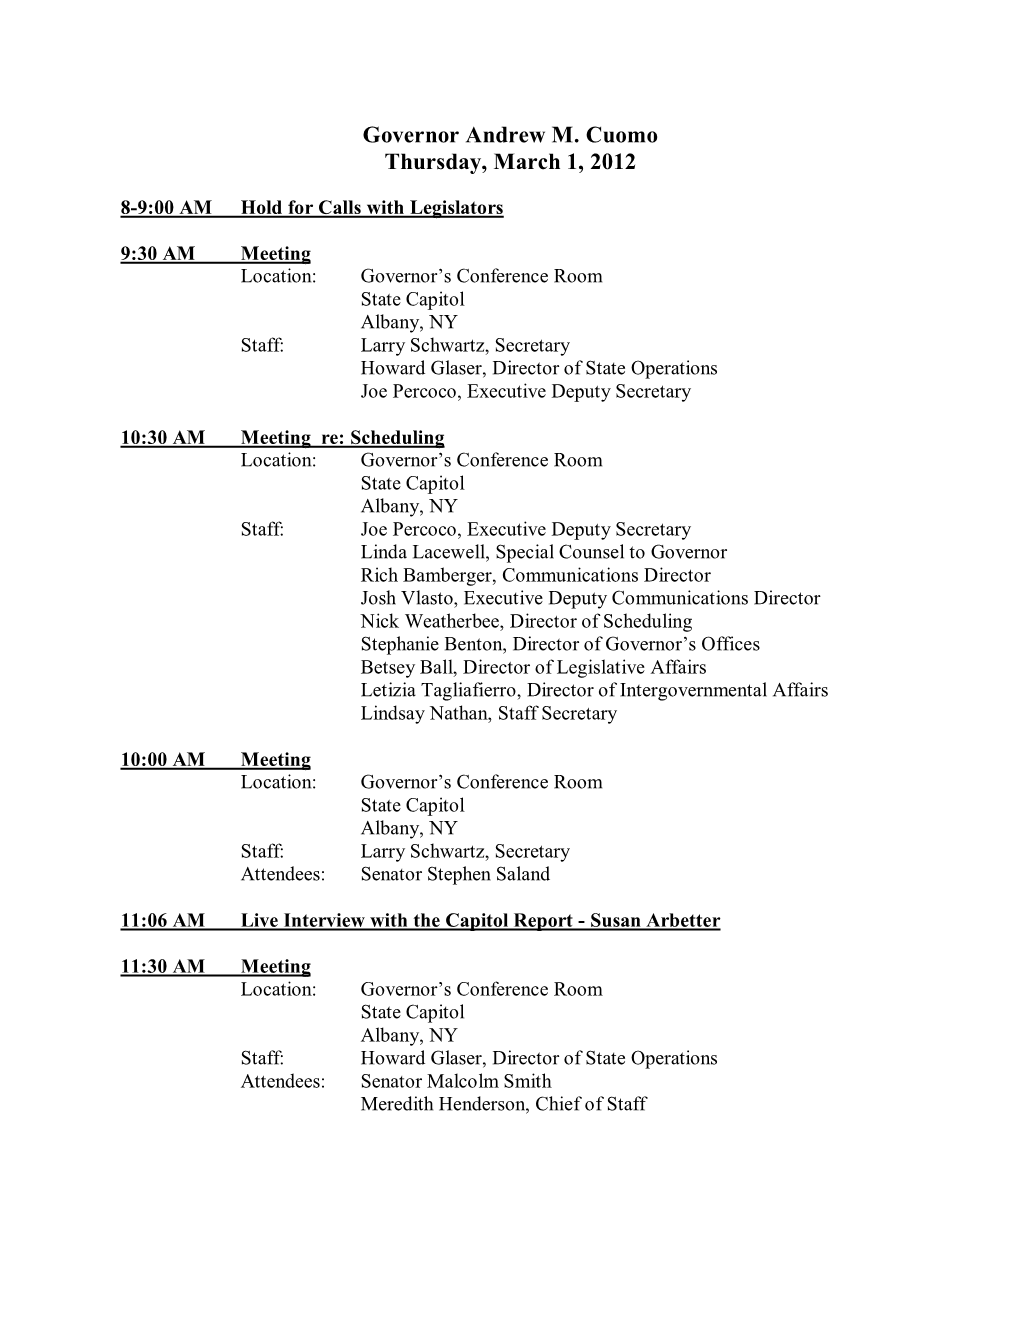 Governor Andrew M. Cuomo Thursday, March 1, 2012